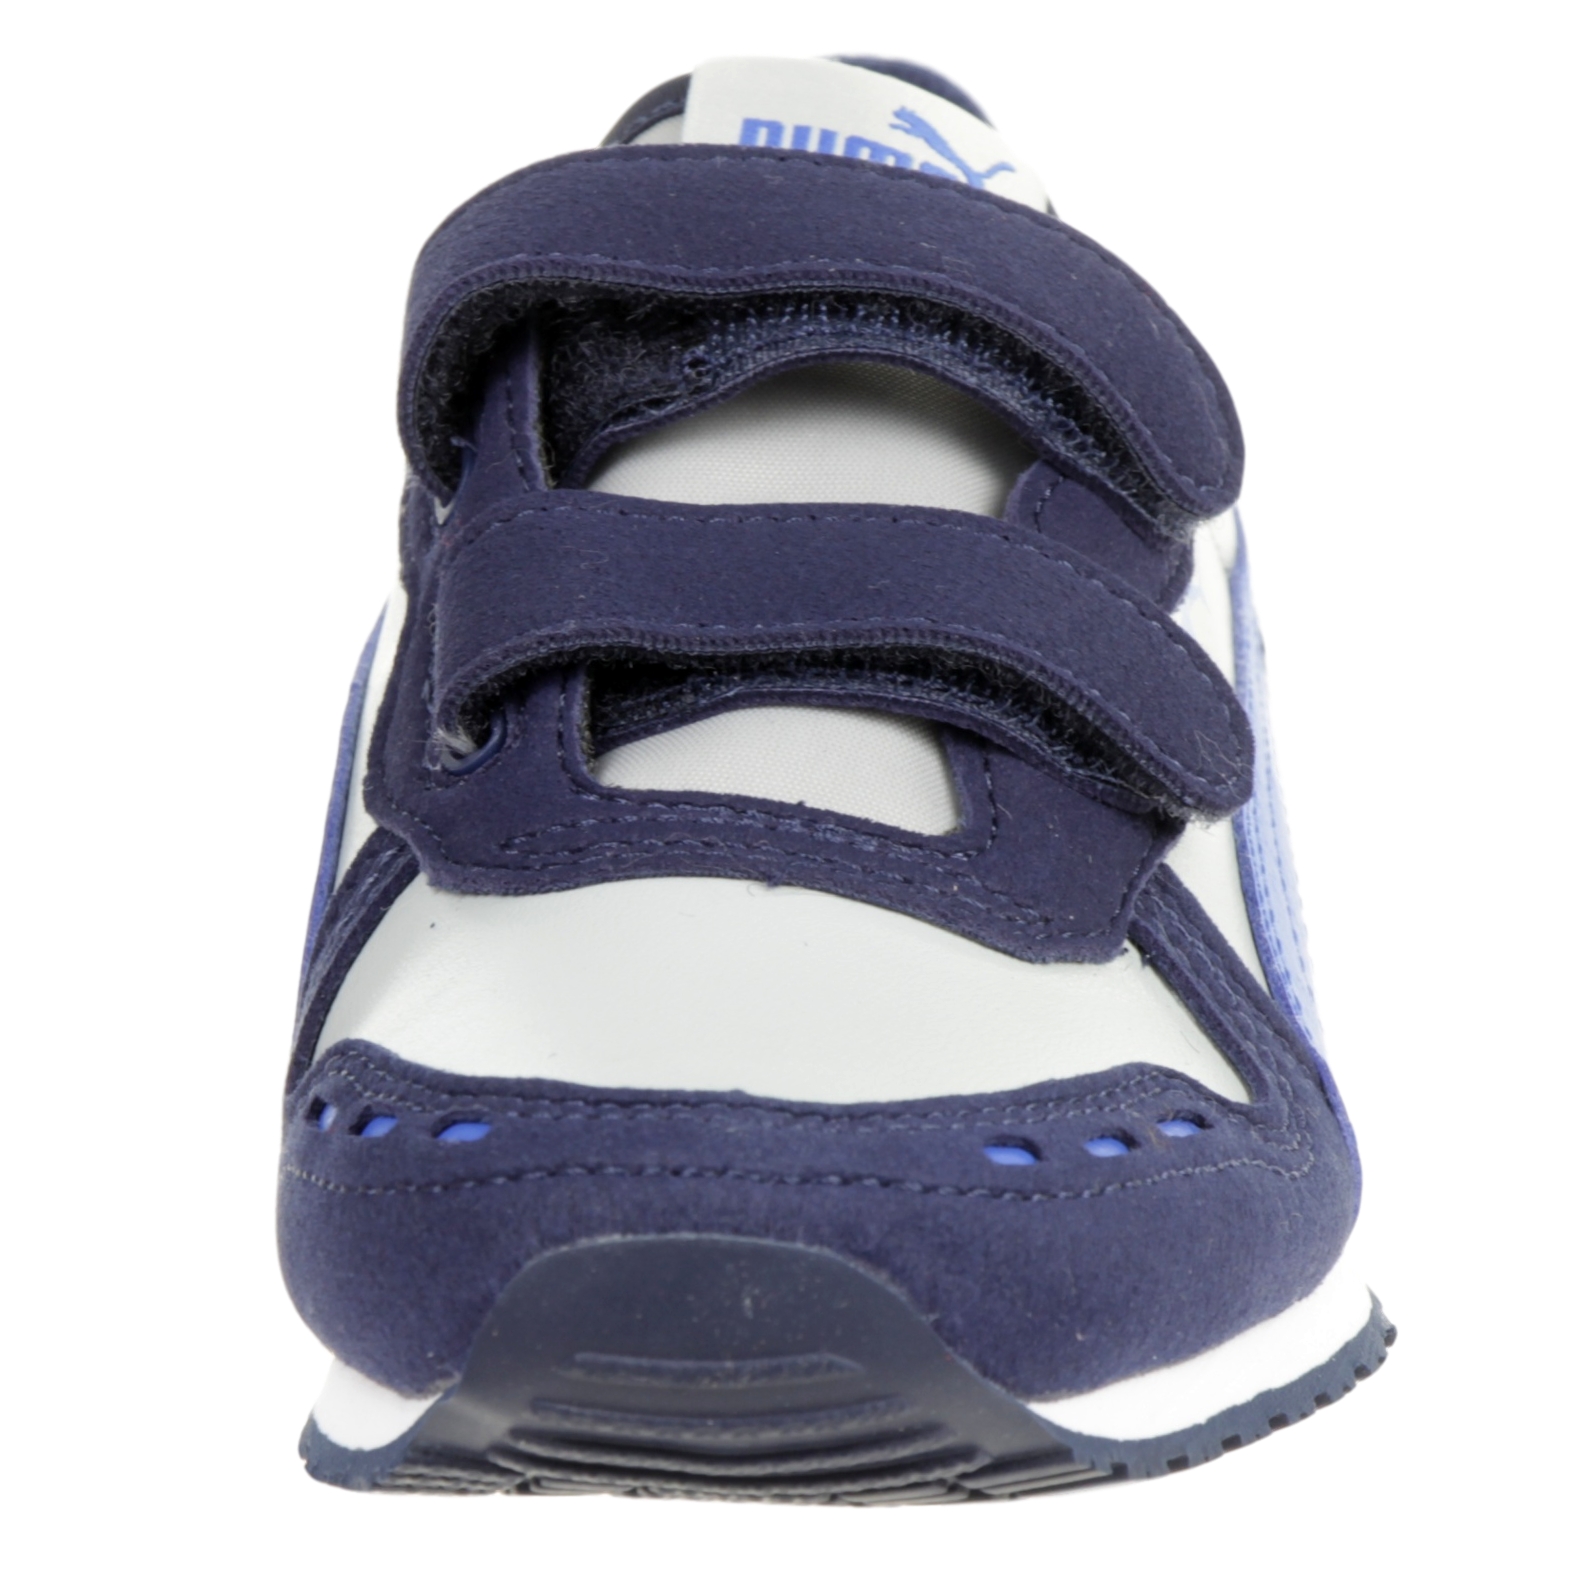 PUMA Cabana Racer SL V PS Kids Sneaker Schuhe blau 360732 82